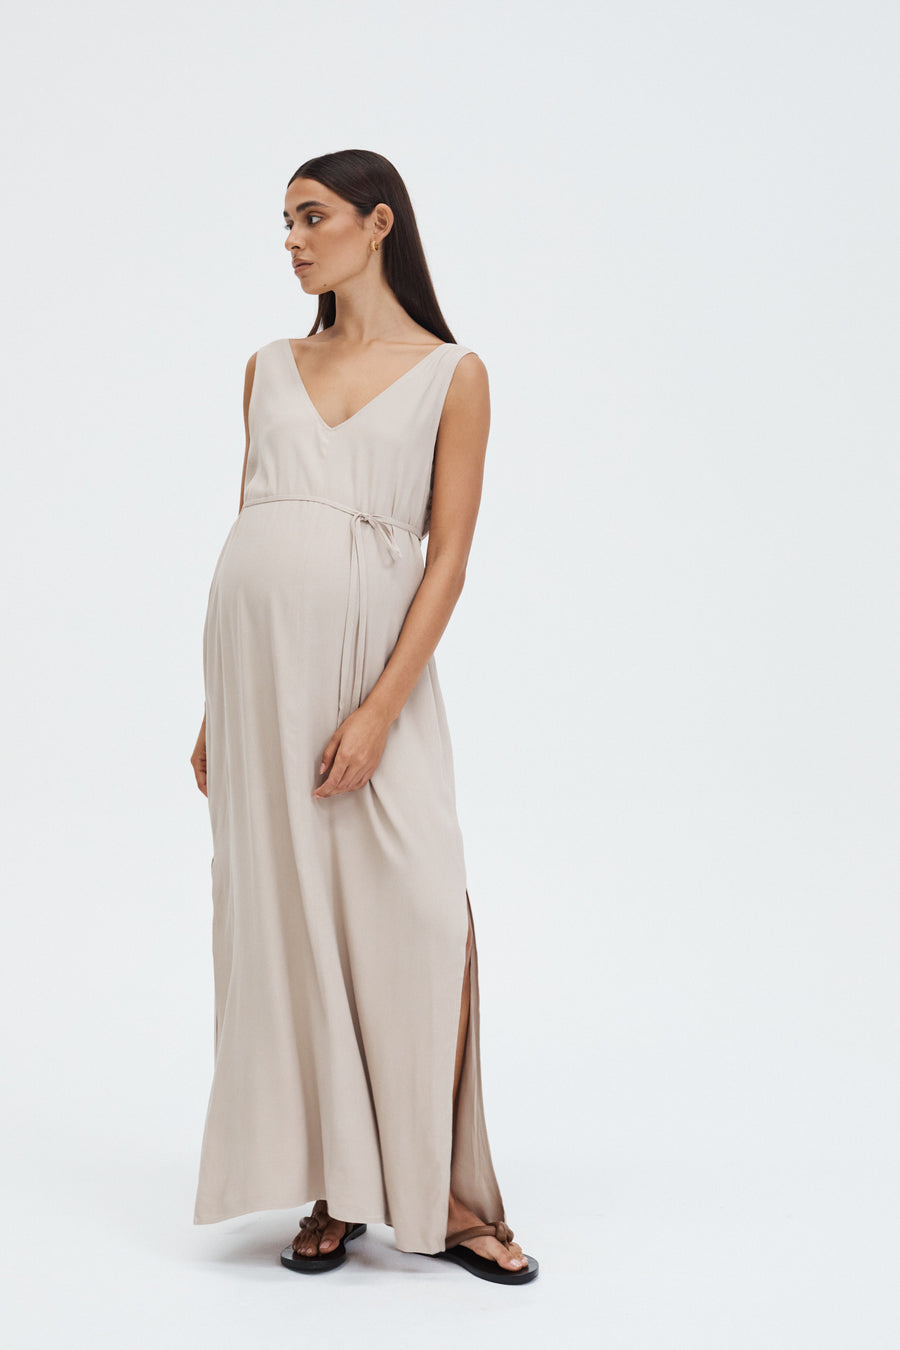 Stylish Baby Shower Dress (Neutral) 6